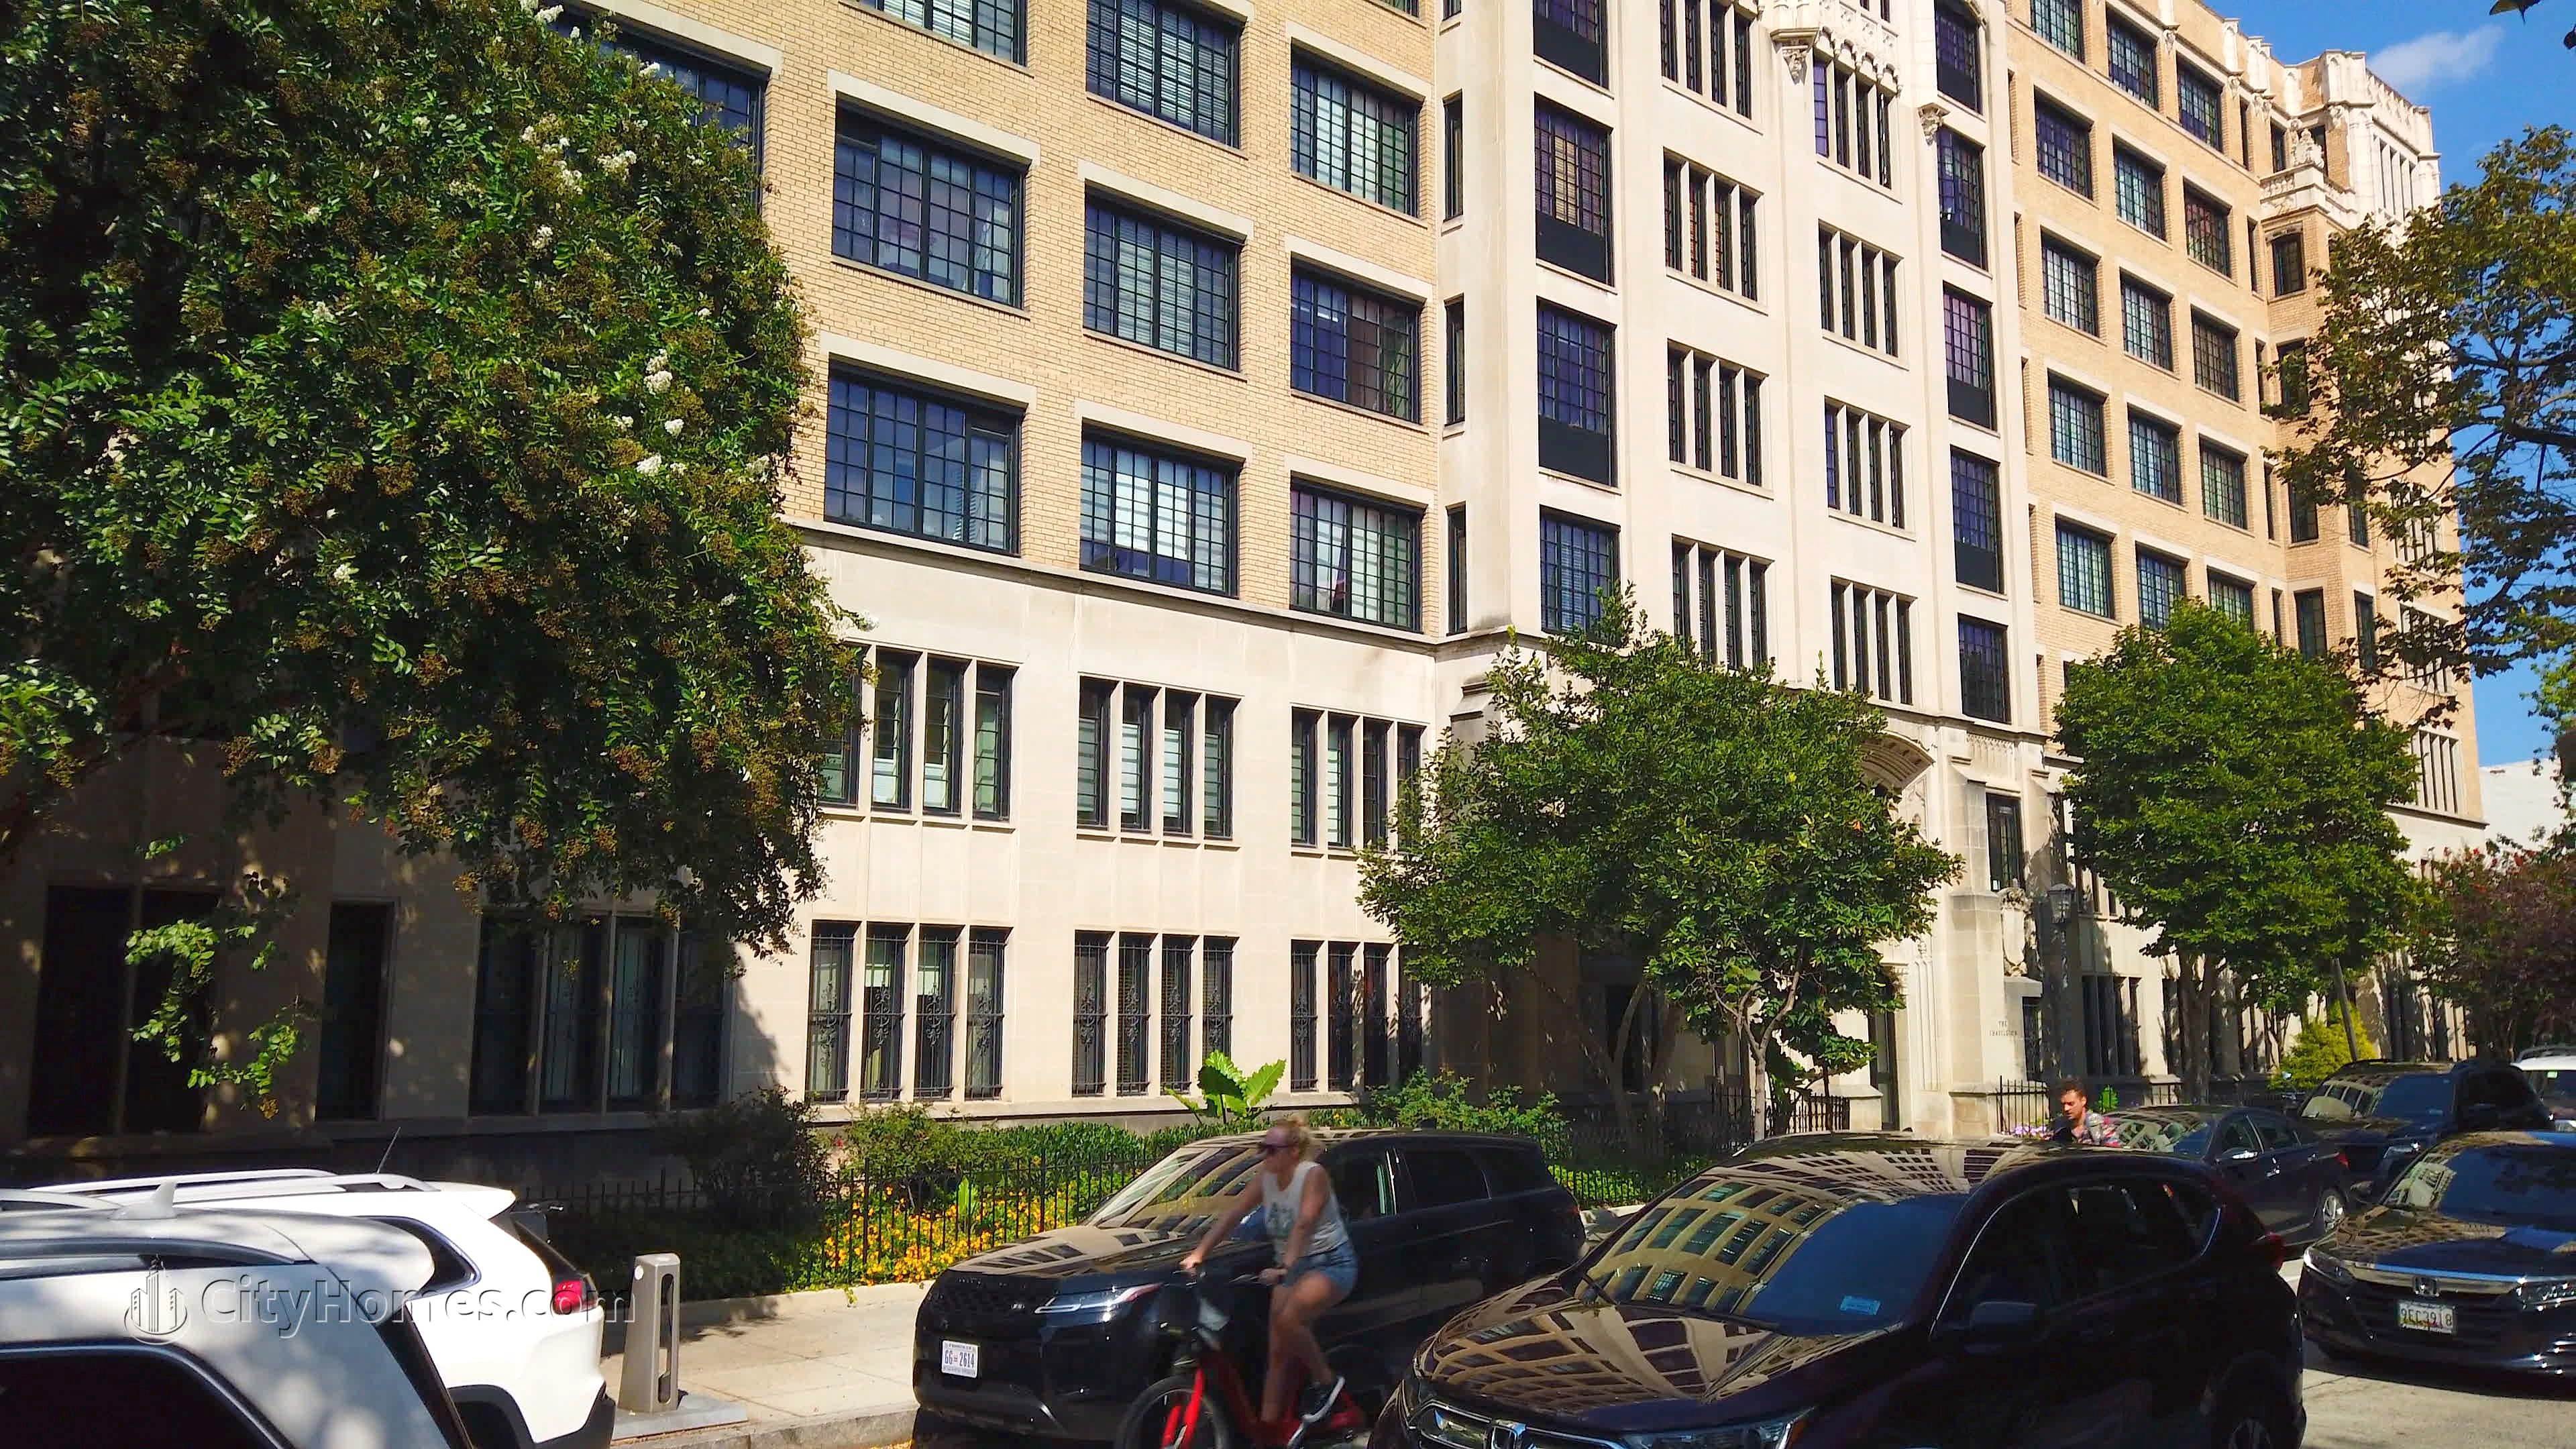 7. Chastleton Co-op building at 1701 16th St NW, Dupont Circle, Washington, DC 20009